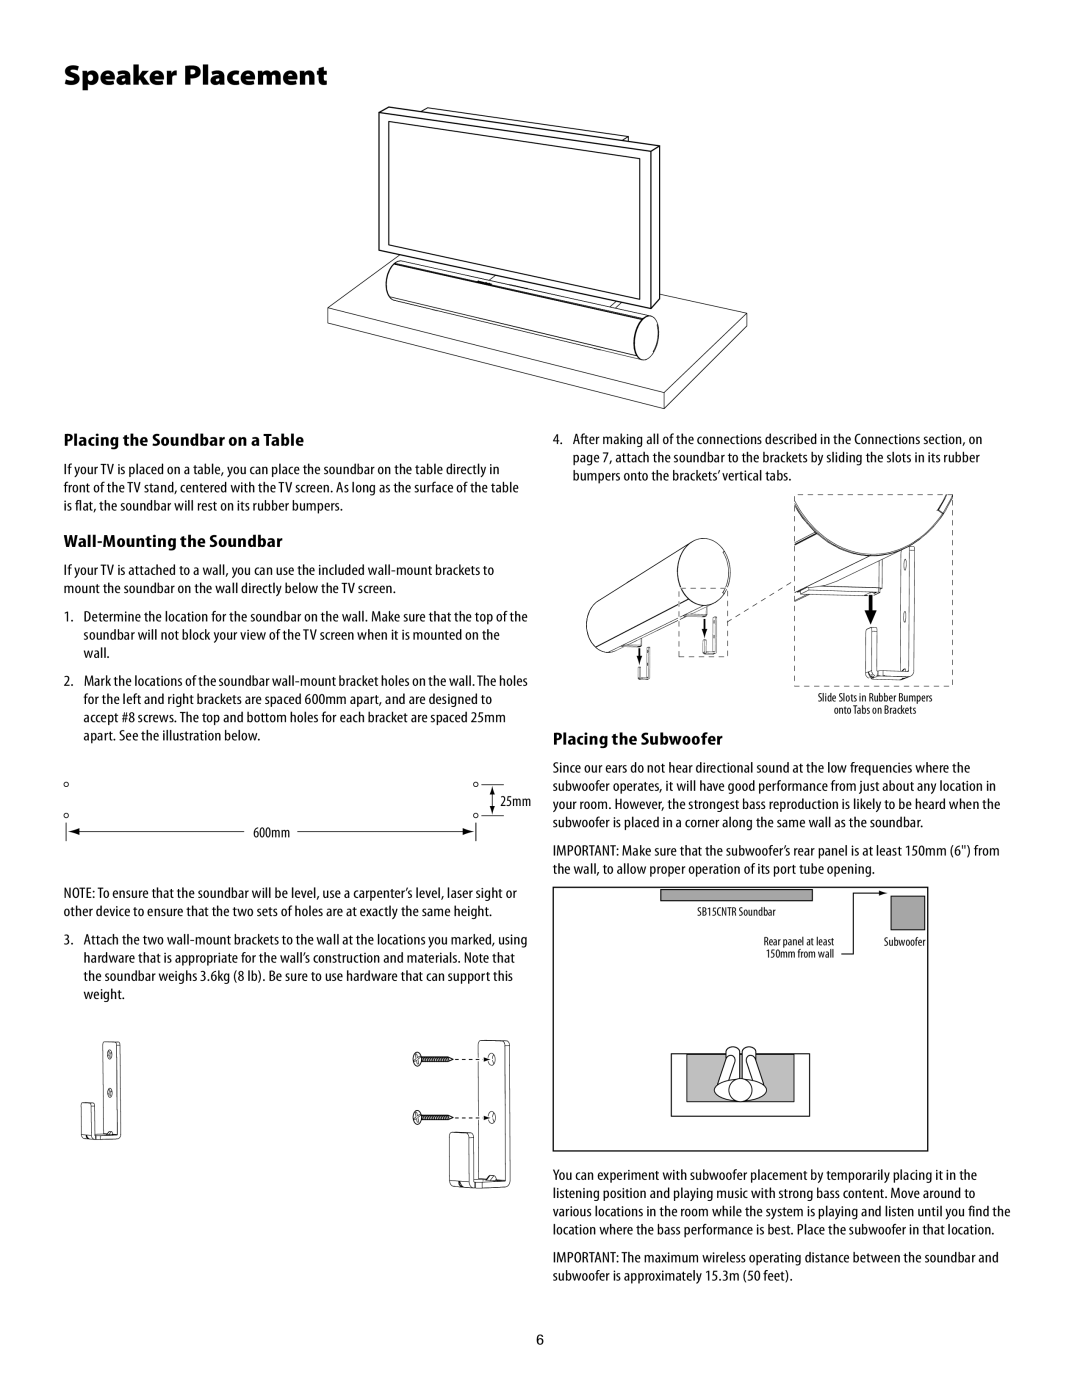 Harman-Kardon SB15/230 manual Speaker Placement, Placing the Soundbar on a Table, Wall-Mountingthe Soundbar 